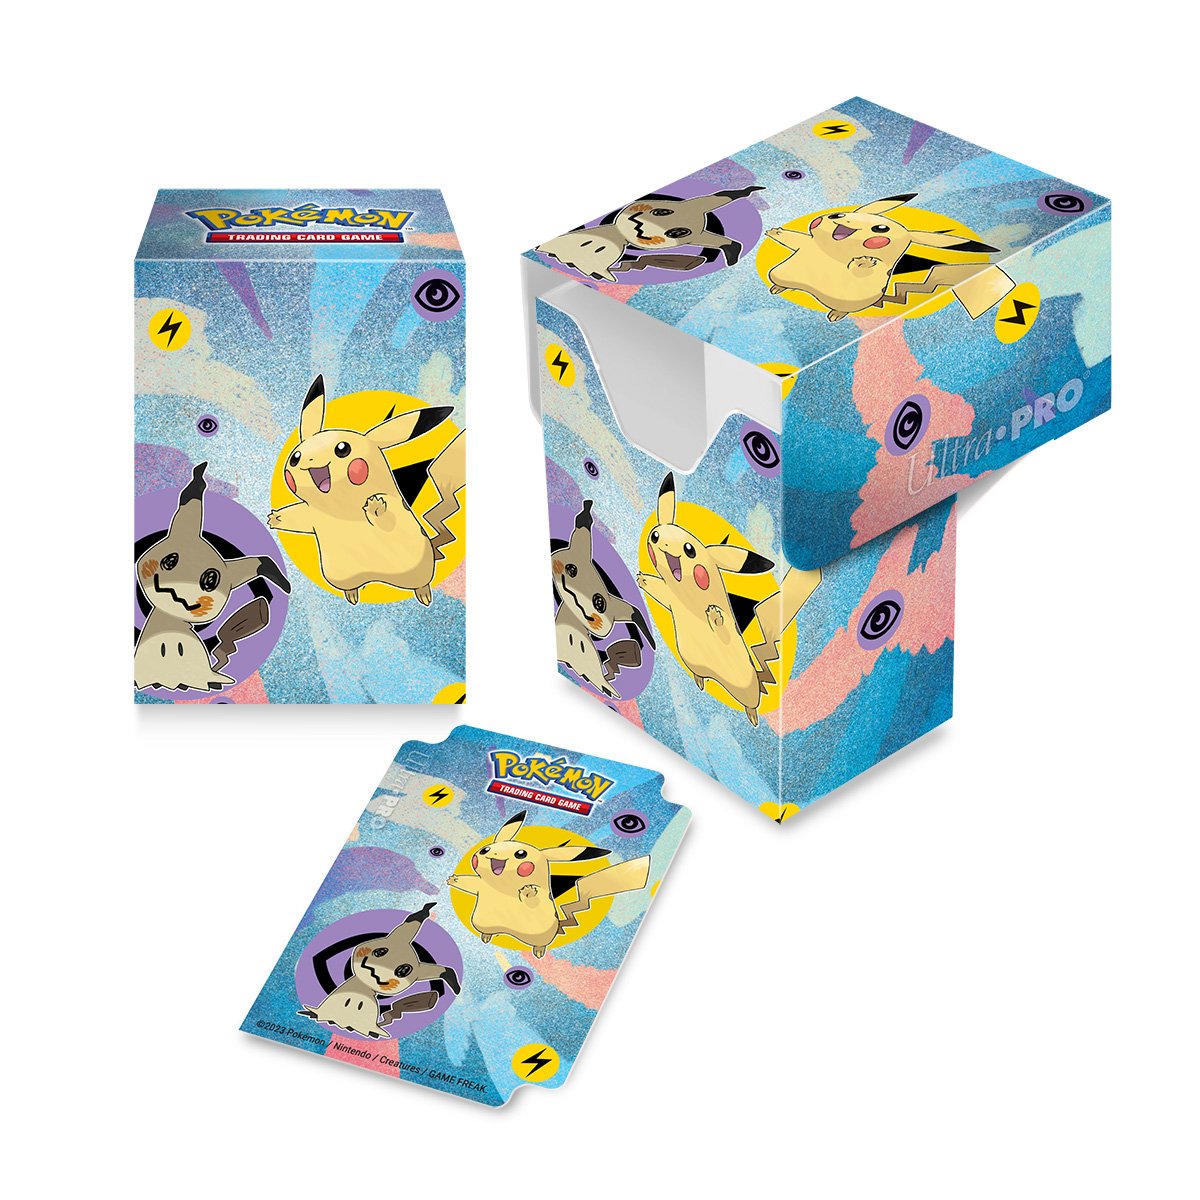 Pokemon GO - TCG Boîte cadeau Pikachu - Anglais 